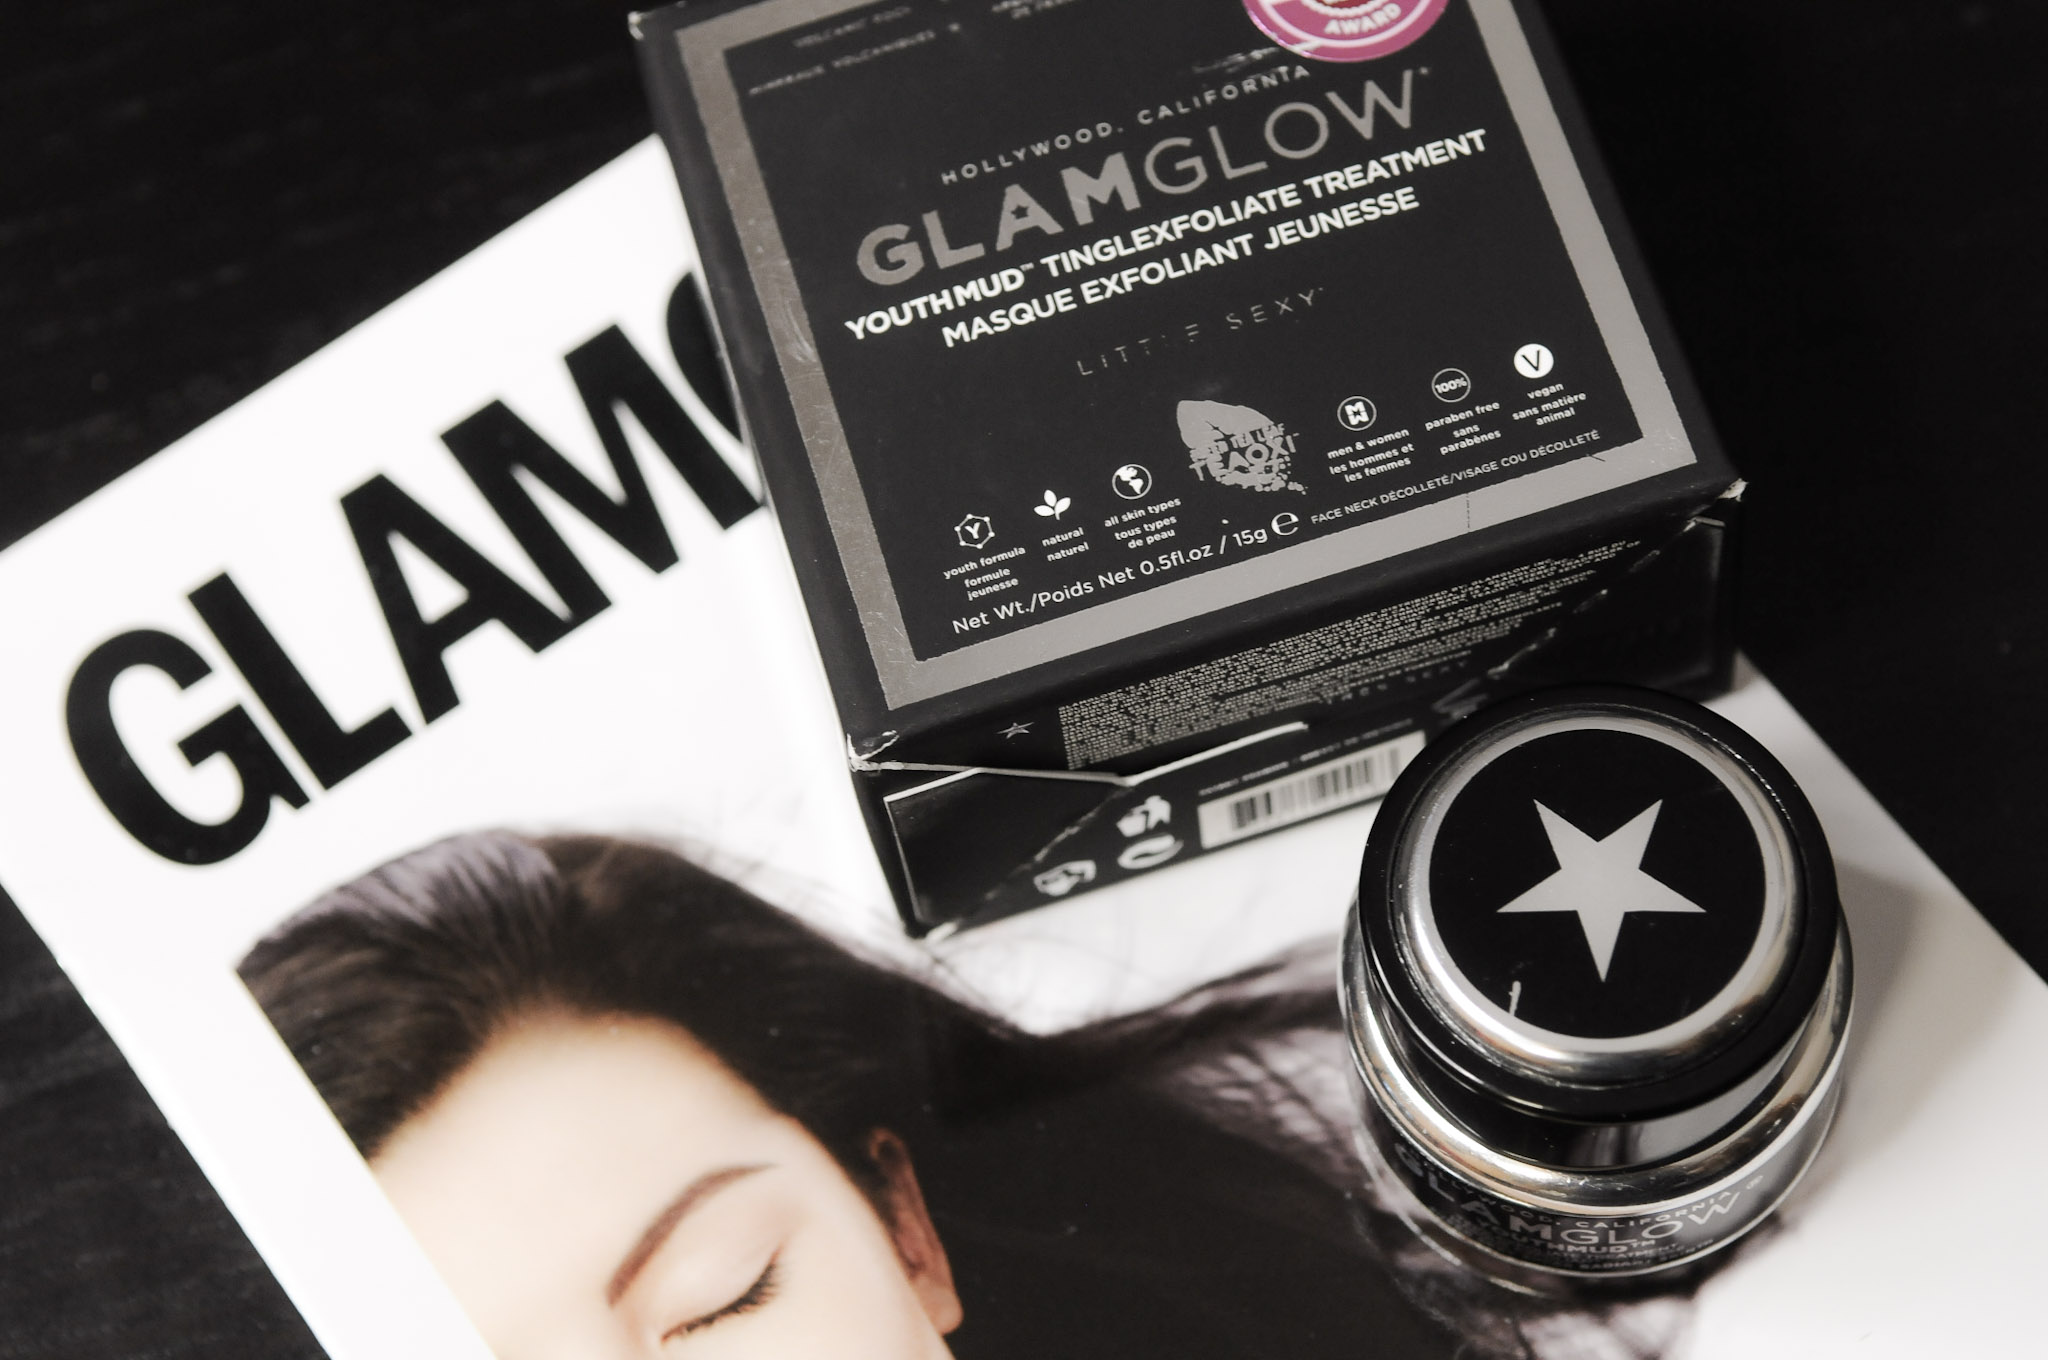 GlamGlow YouthMud Tinglexfoliate Treatment Review - Ingrid Hughes Beauty